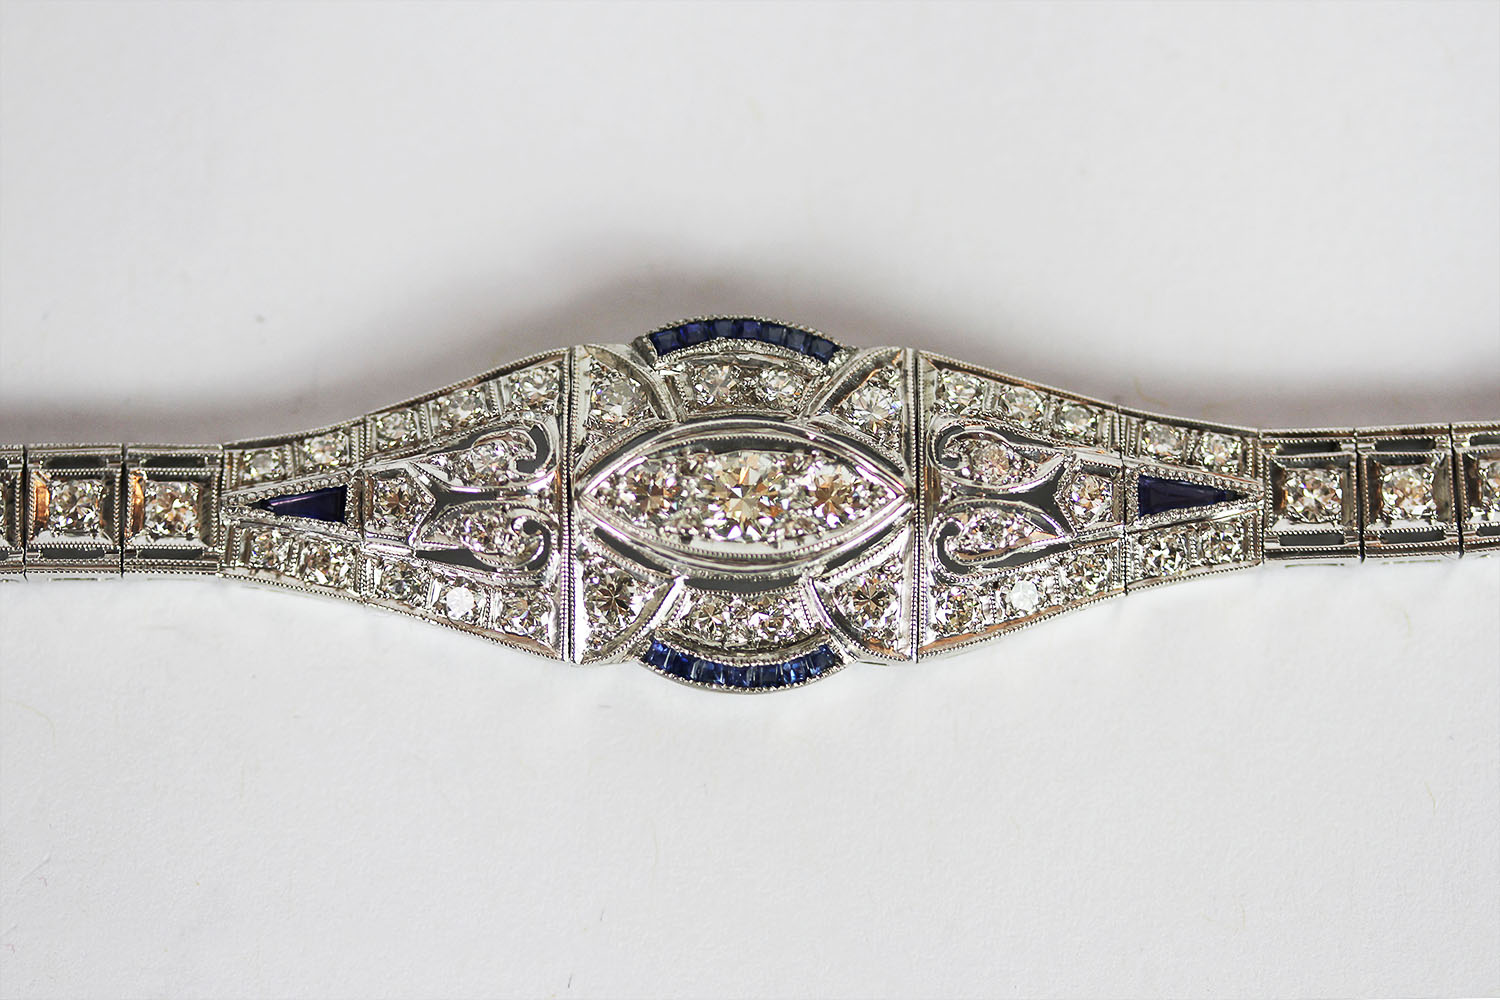 Sapphire and Diamond bracelet, set with 14 baguette cut sapphires and 2 trillion cut sapphires,